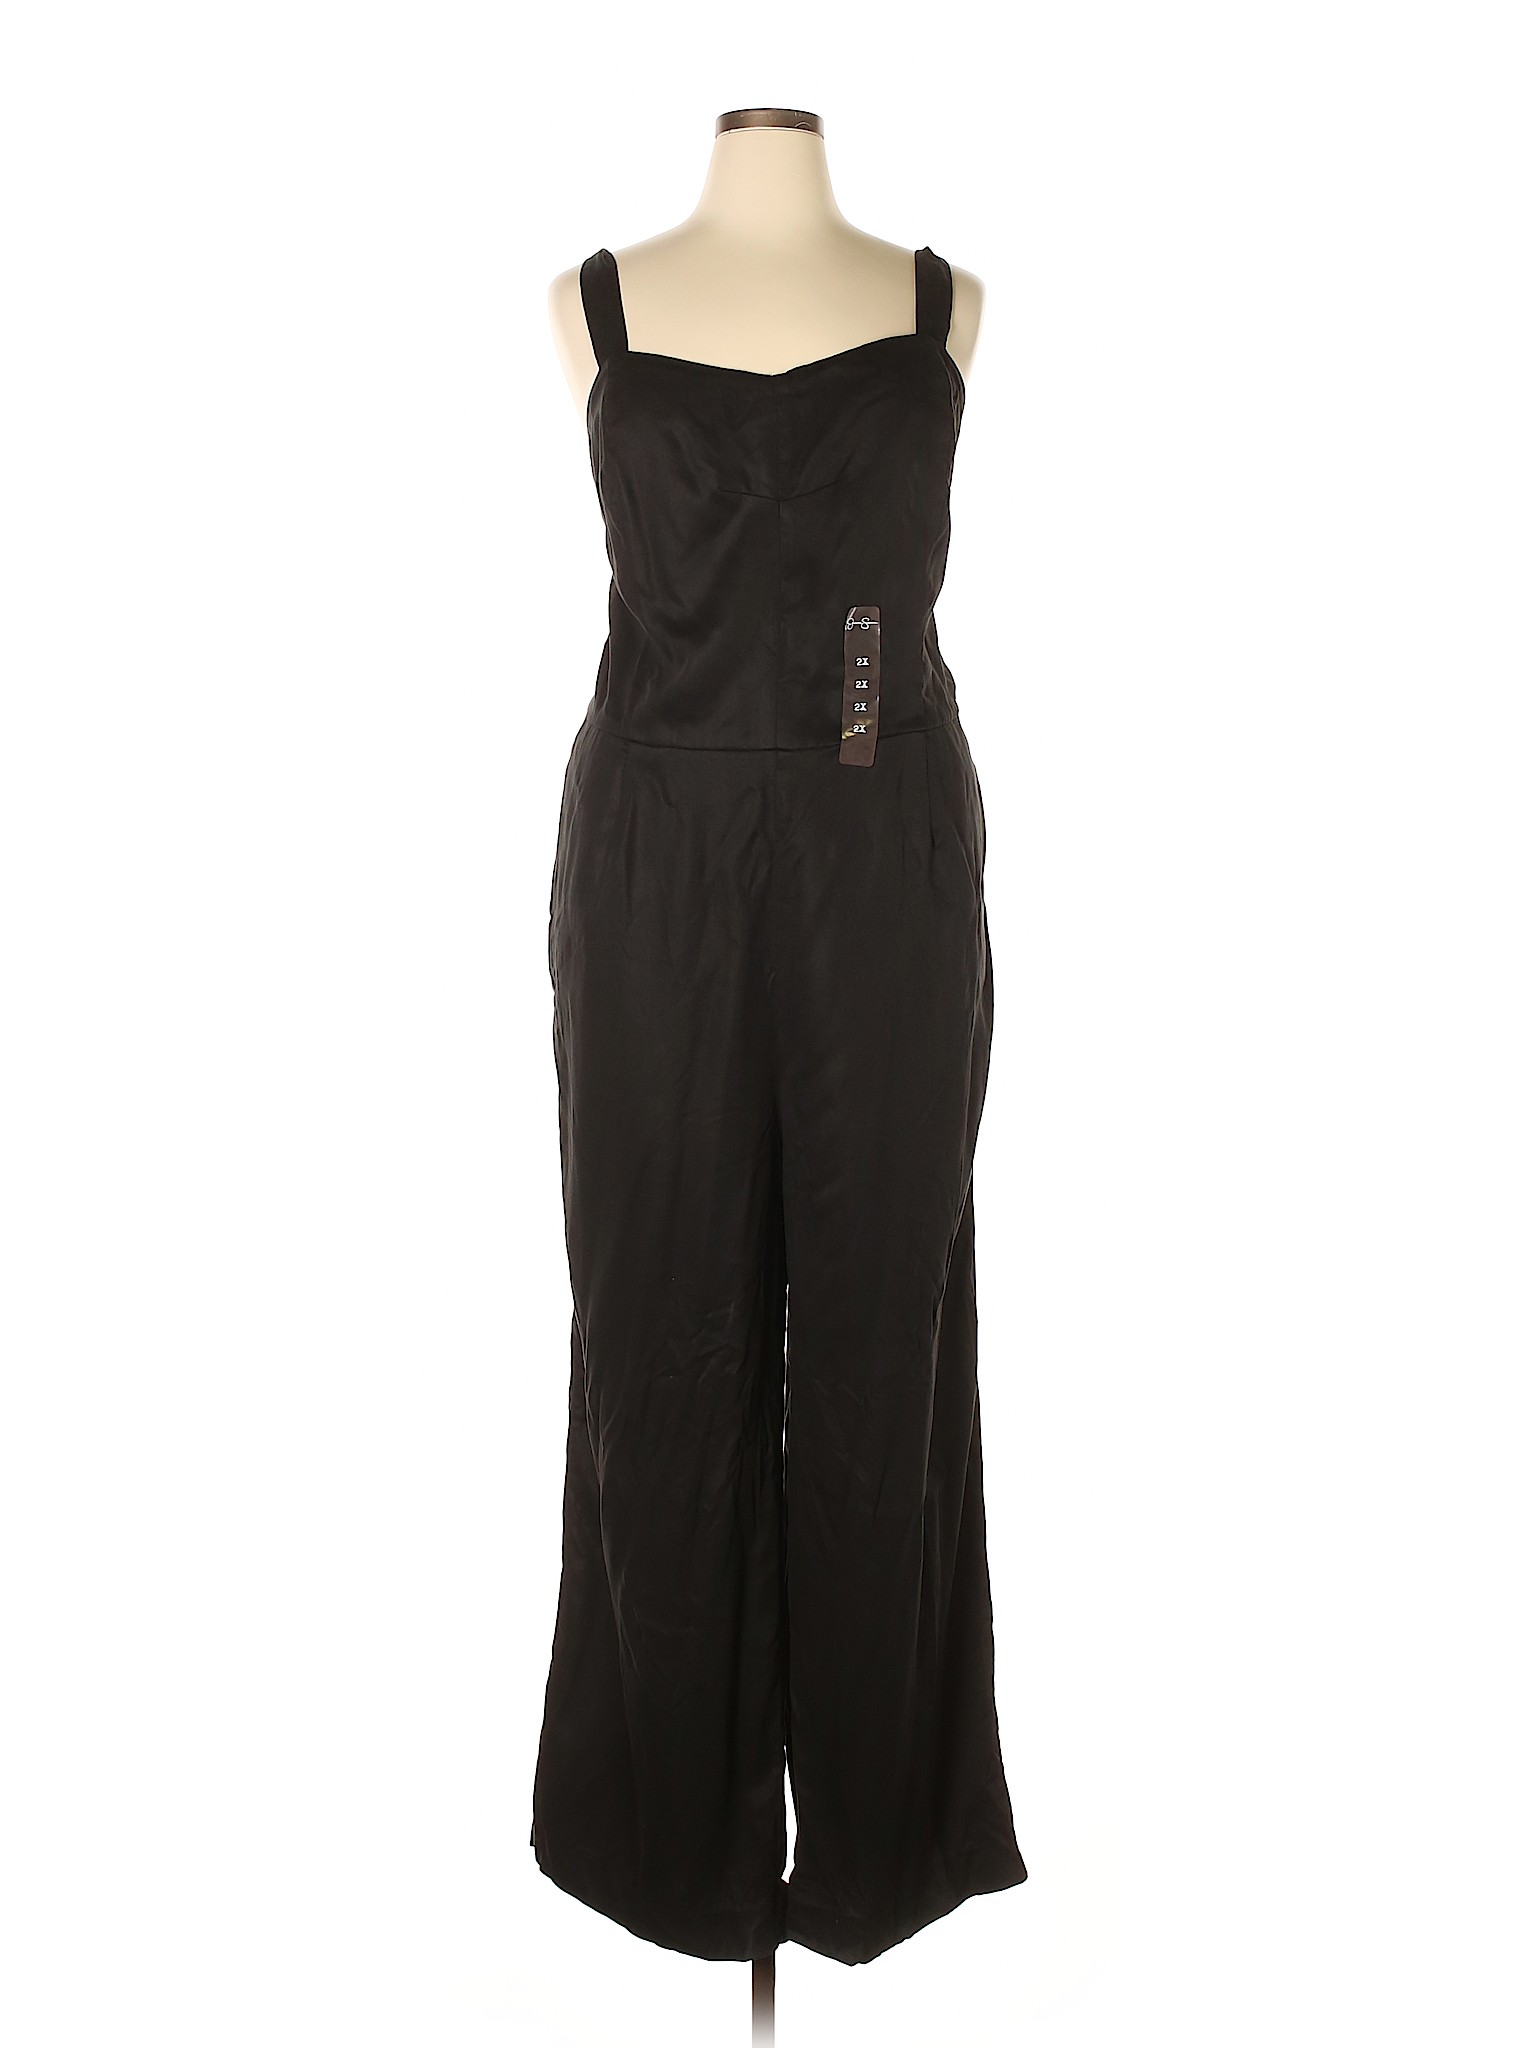 Jessica Simpson Solid Black Jumpsuit Size 2X (Plus) - 69% off | ThredUp